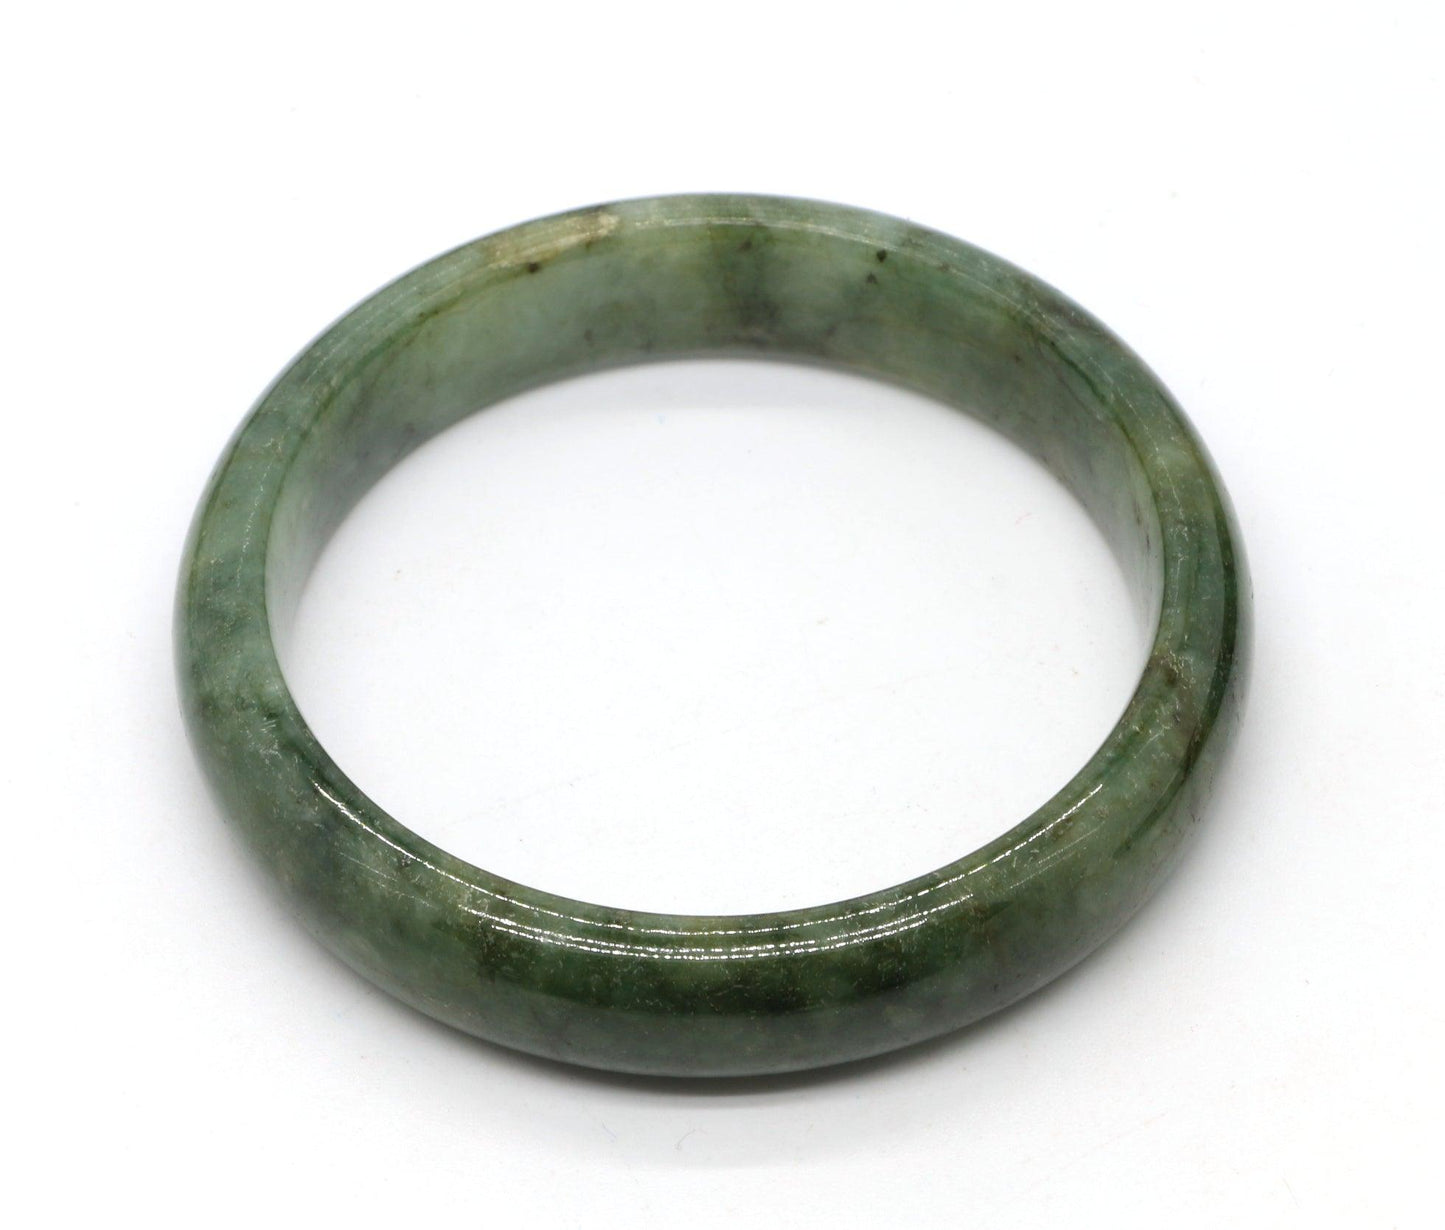 Type A Certified Jadeite Jade Bangle Size 56 -58mm B0BNFNQ813 - Jade-collector.com